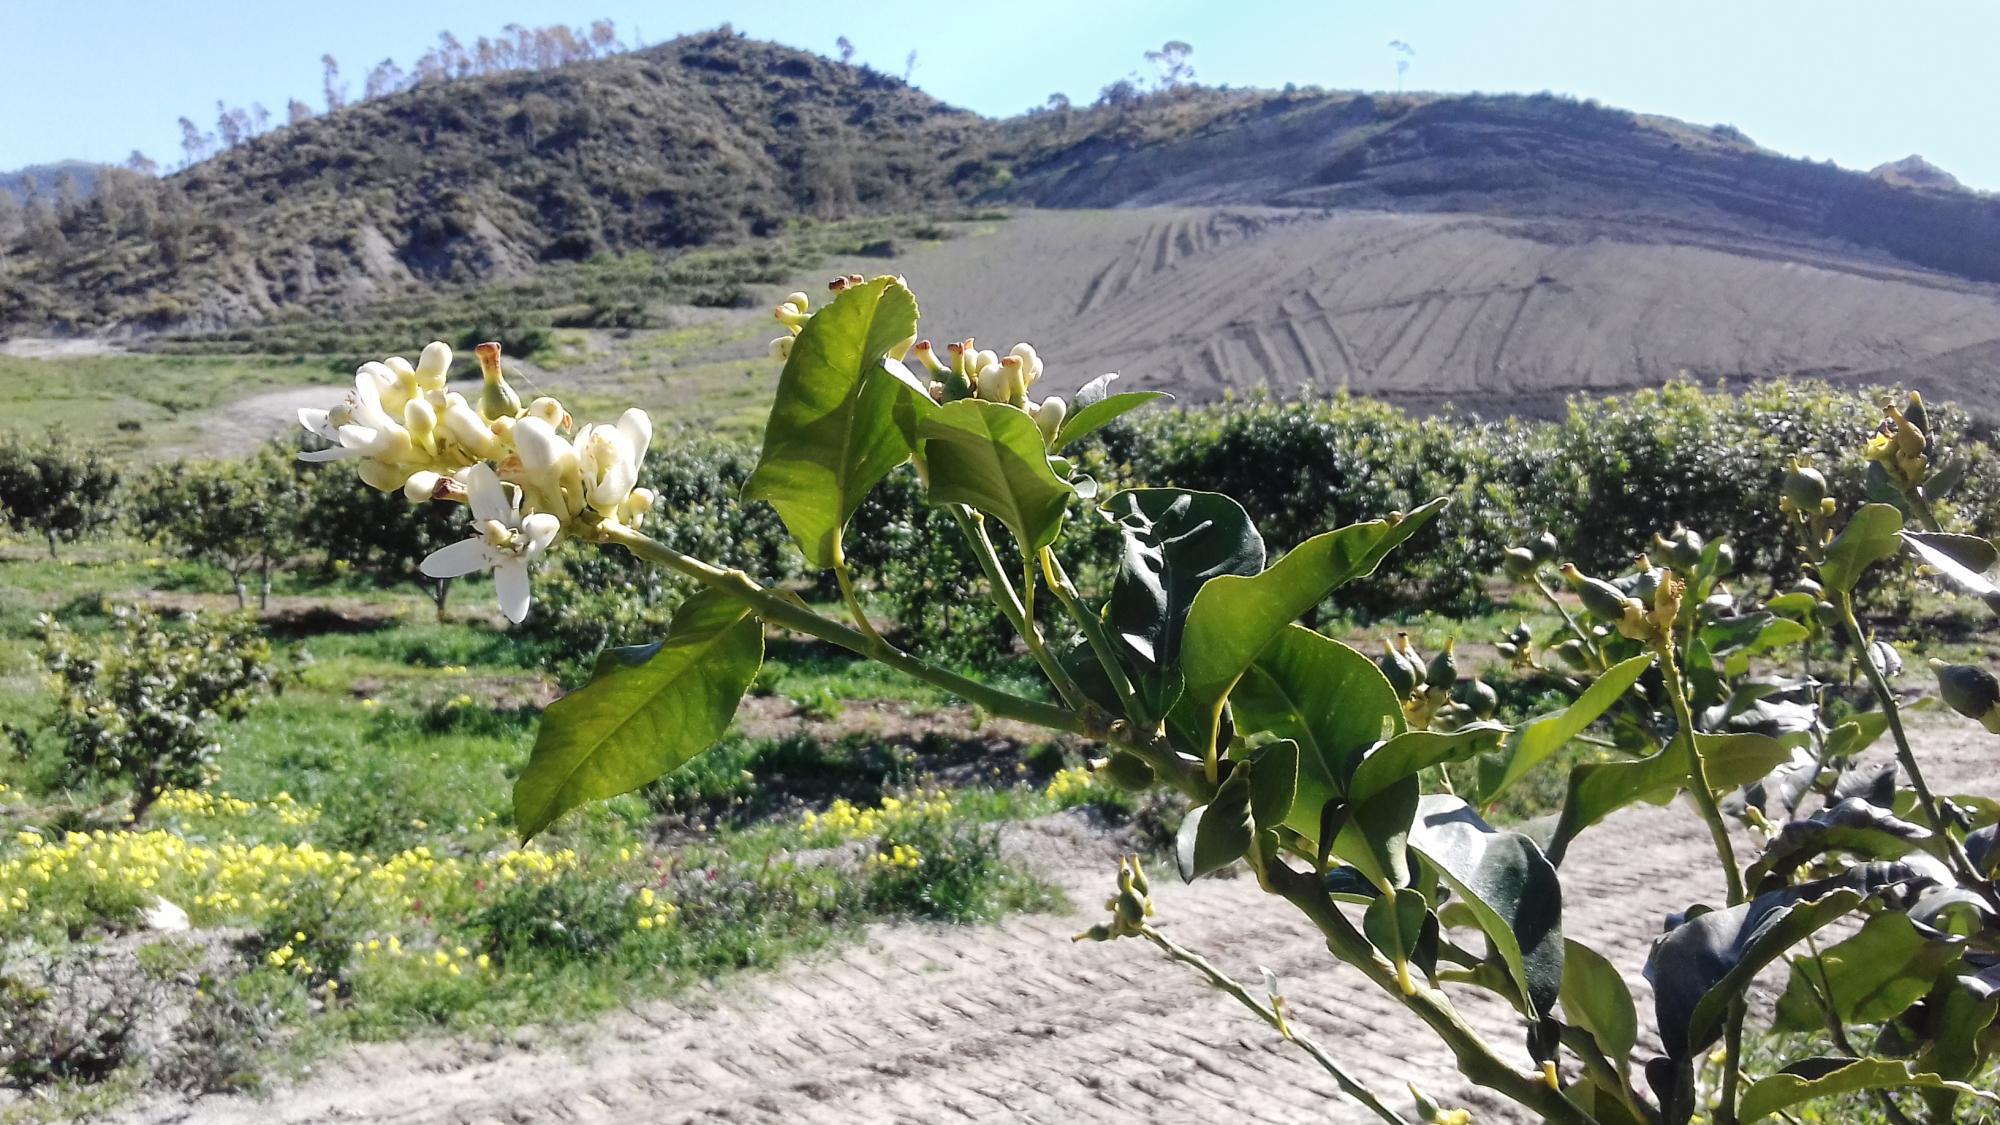 zagara, the bergamot flower